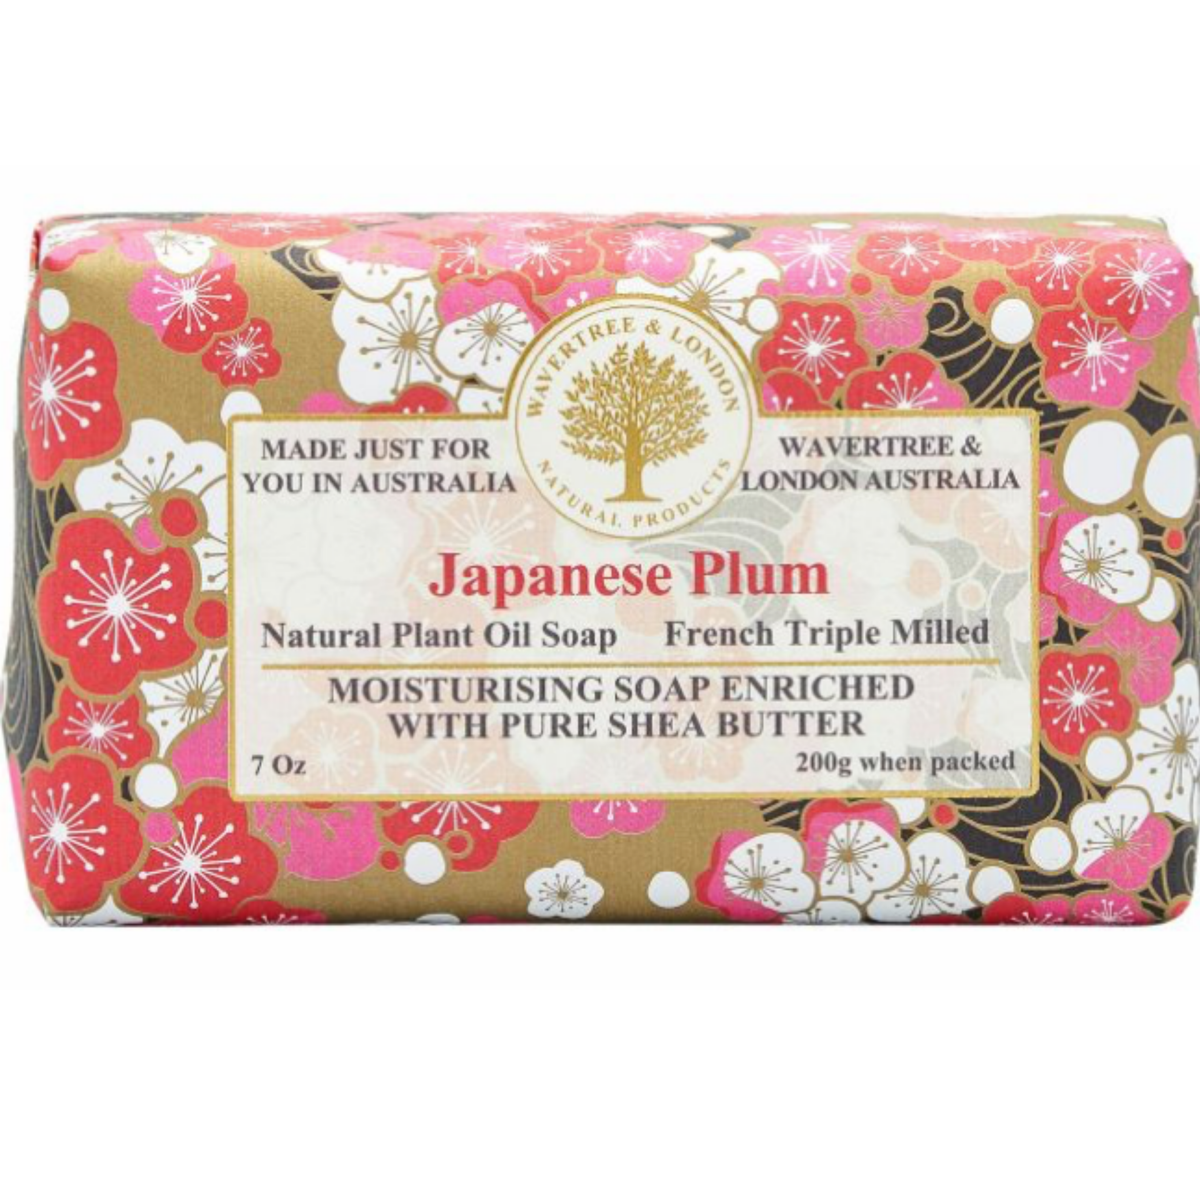 JAPANESE PLUM SOAP - WAVERTREE & LONDON